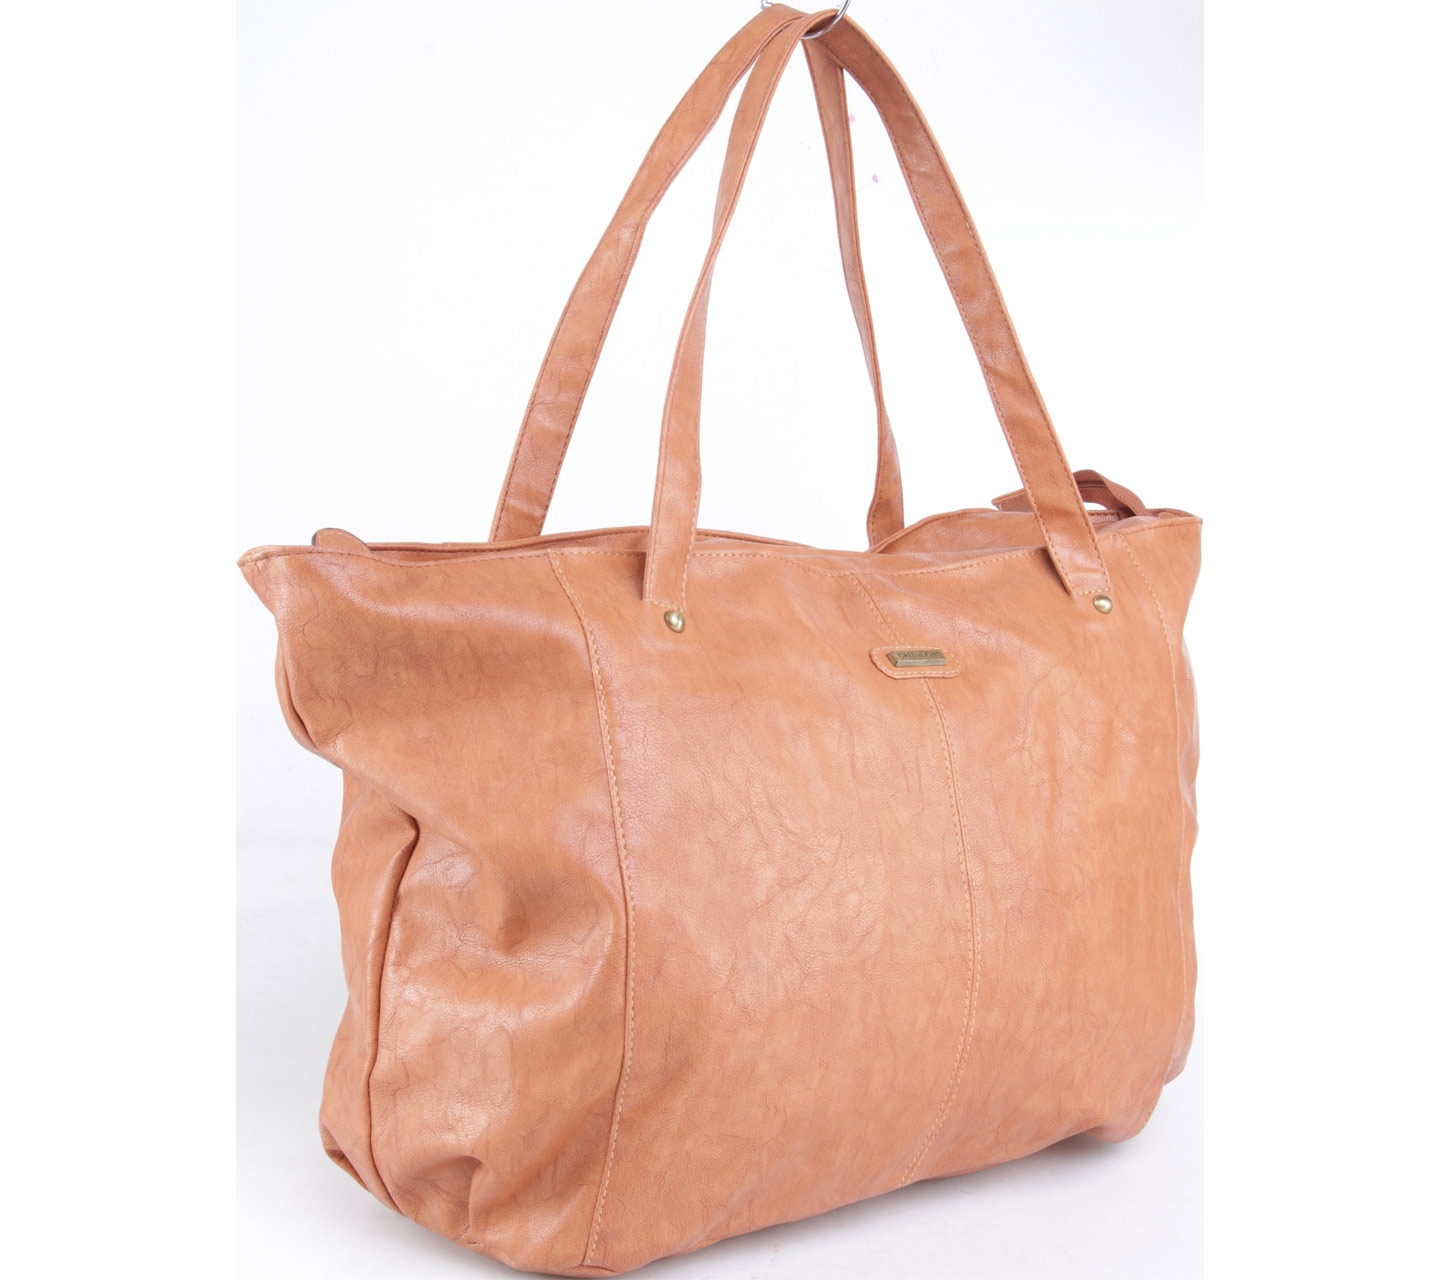 Greenlight Brown Tote Bag